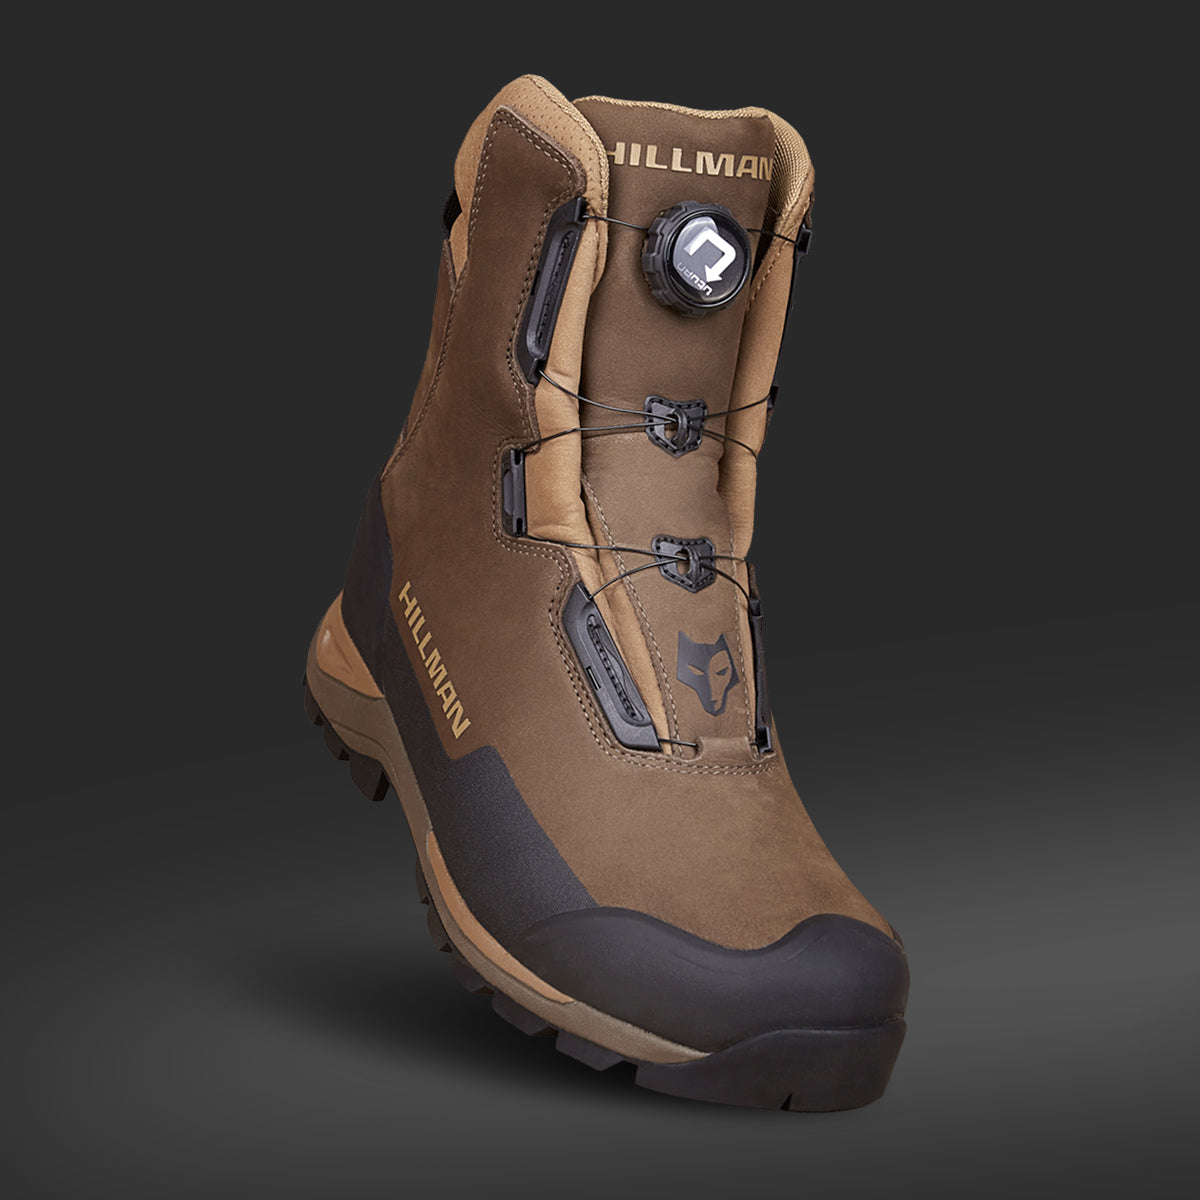 waterproof hunting boots uk